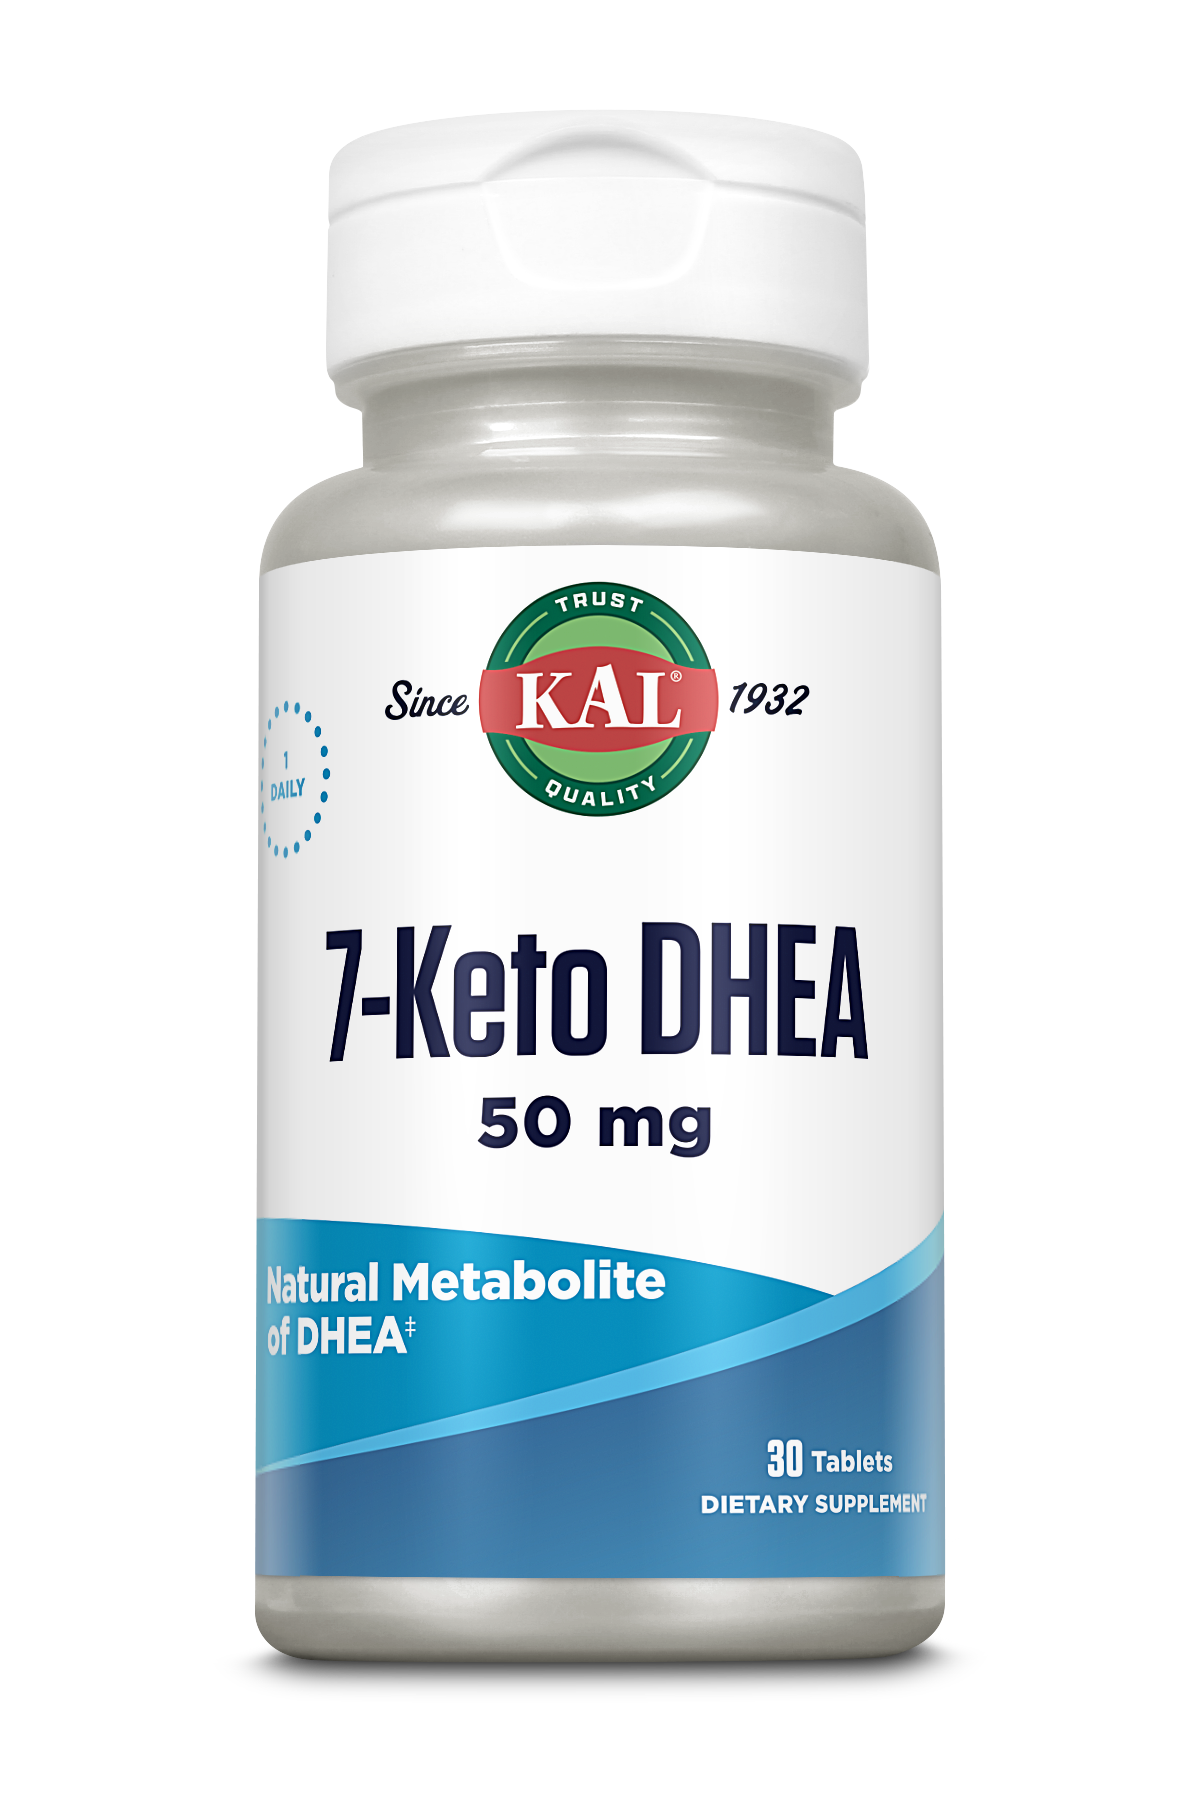 7-Keto DHEA Tablets 50mg